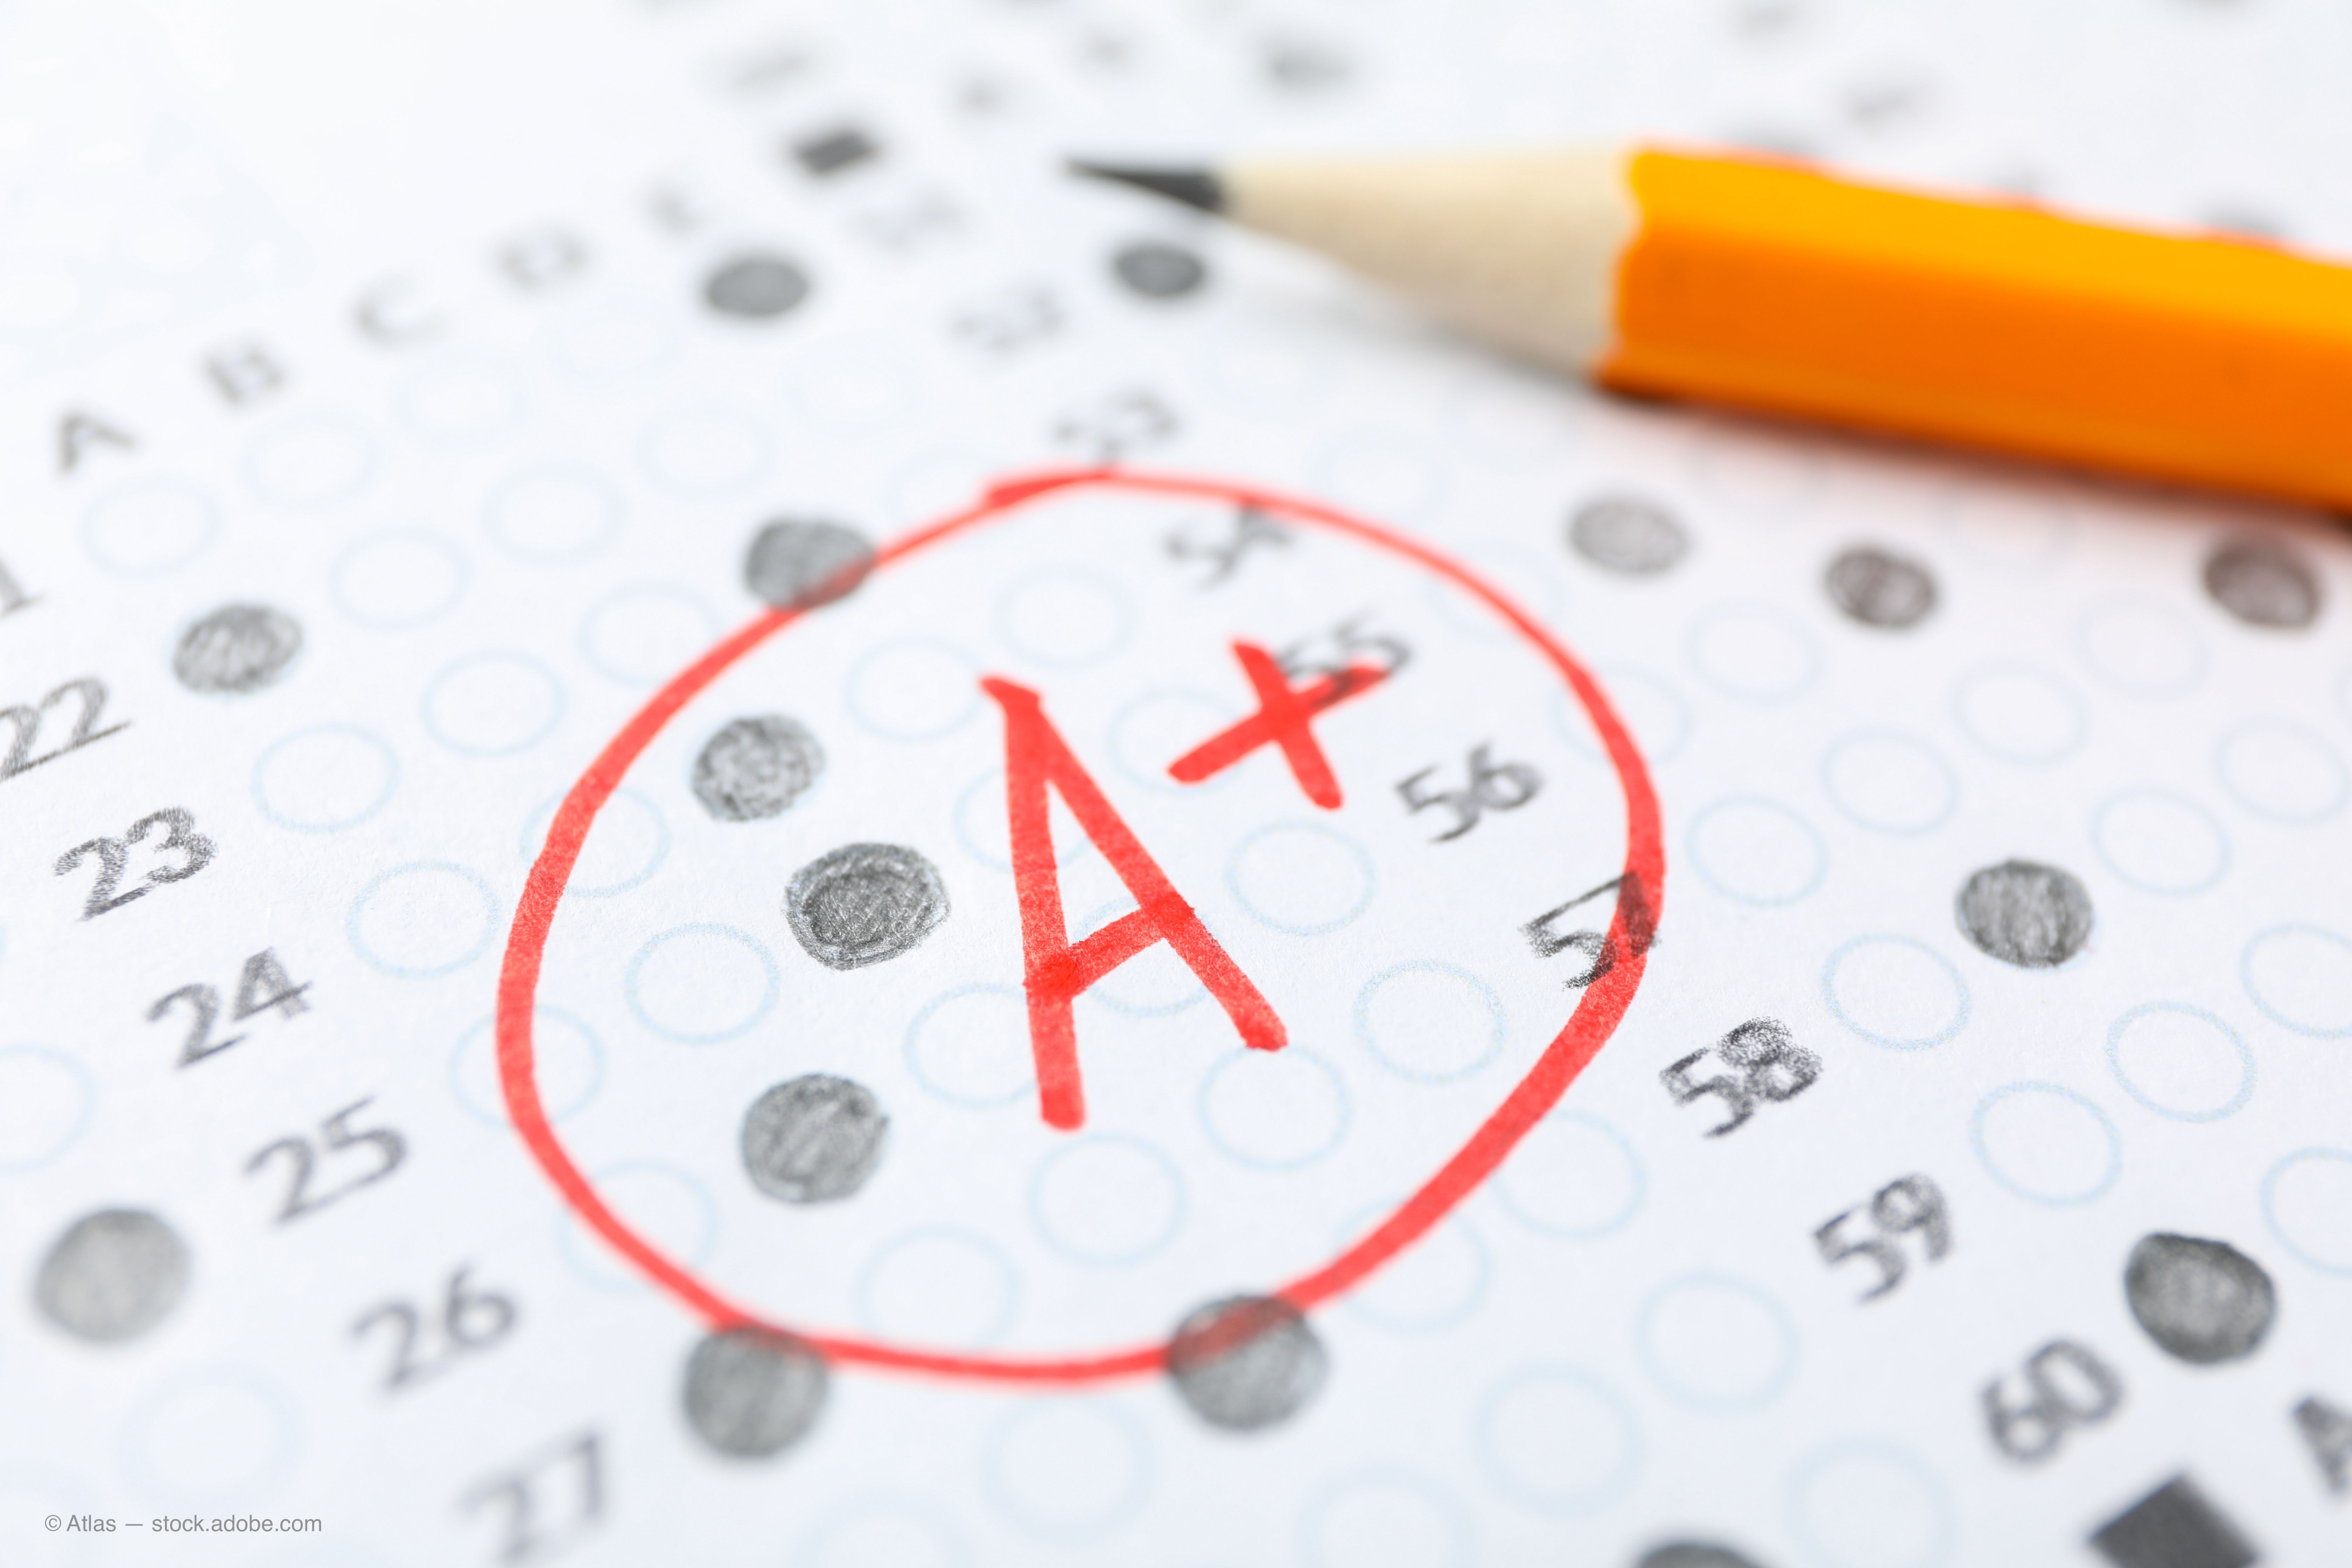 Do grades predict performance?